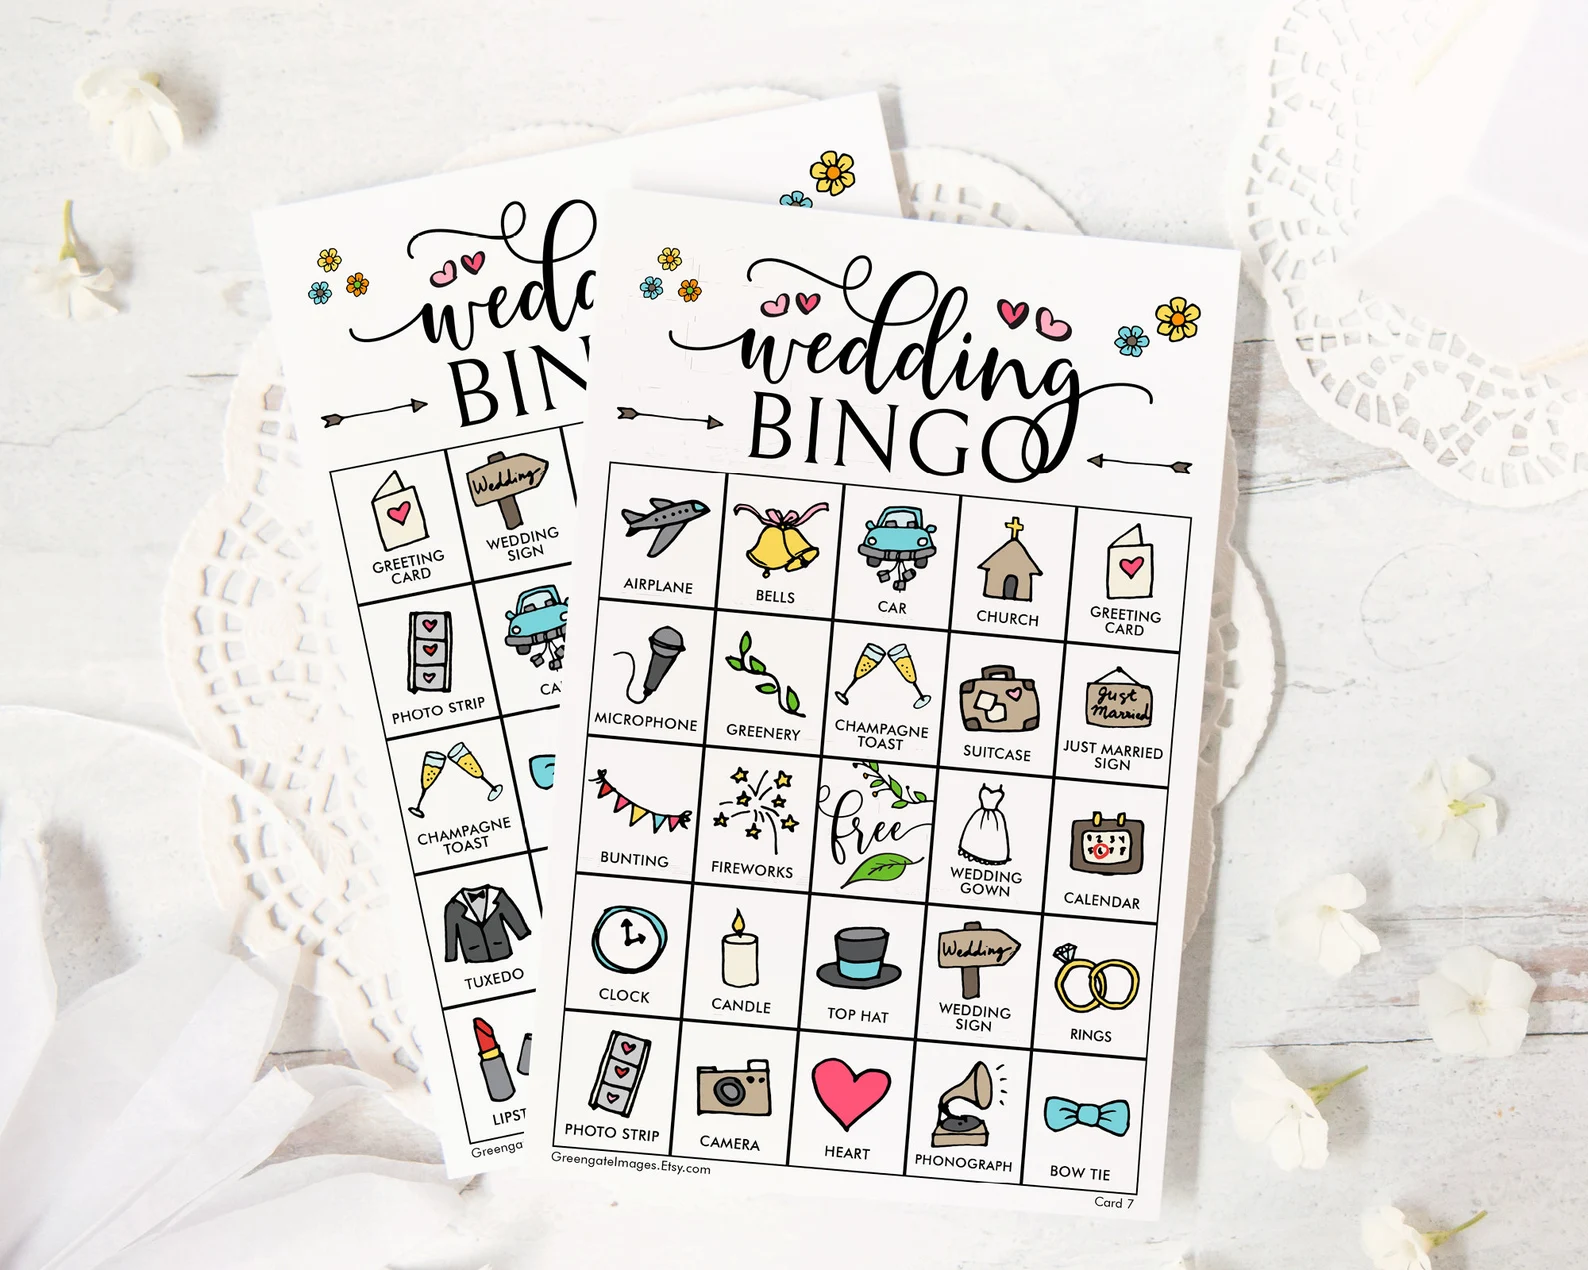 edding Bingo Cards: Printable bingo cards, colorful bingo set, 50 cards, bridal shower games, wedding shower idea, small reception activity